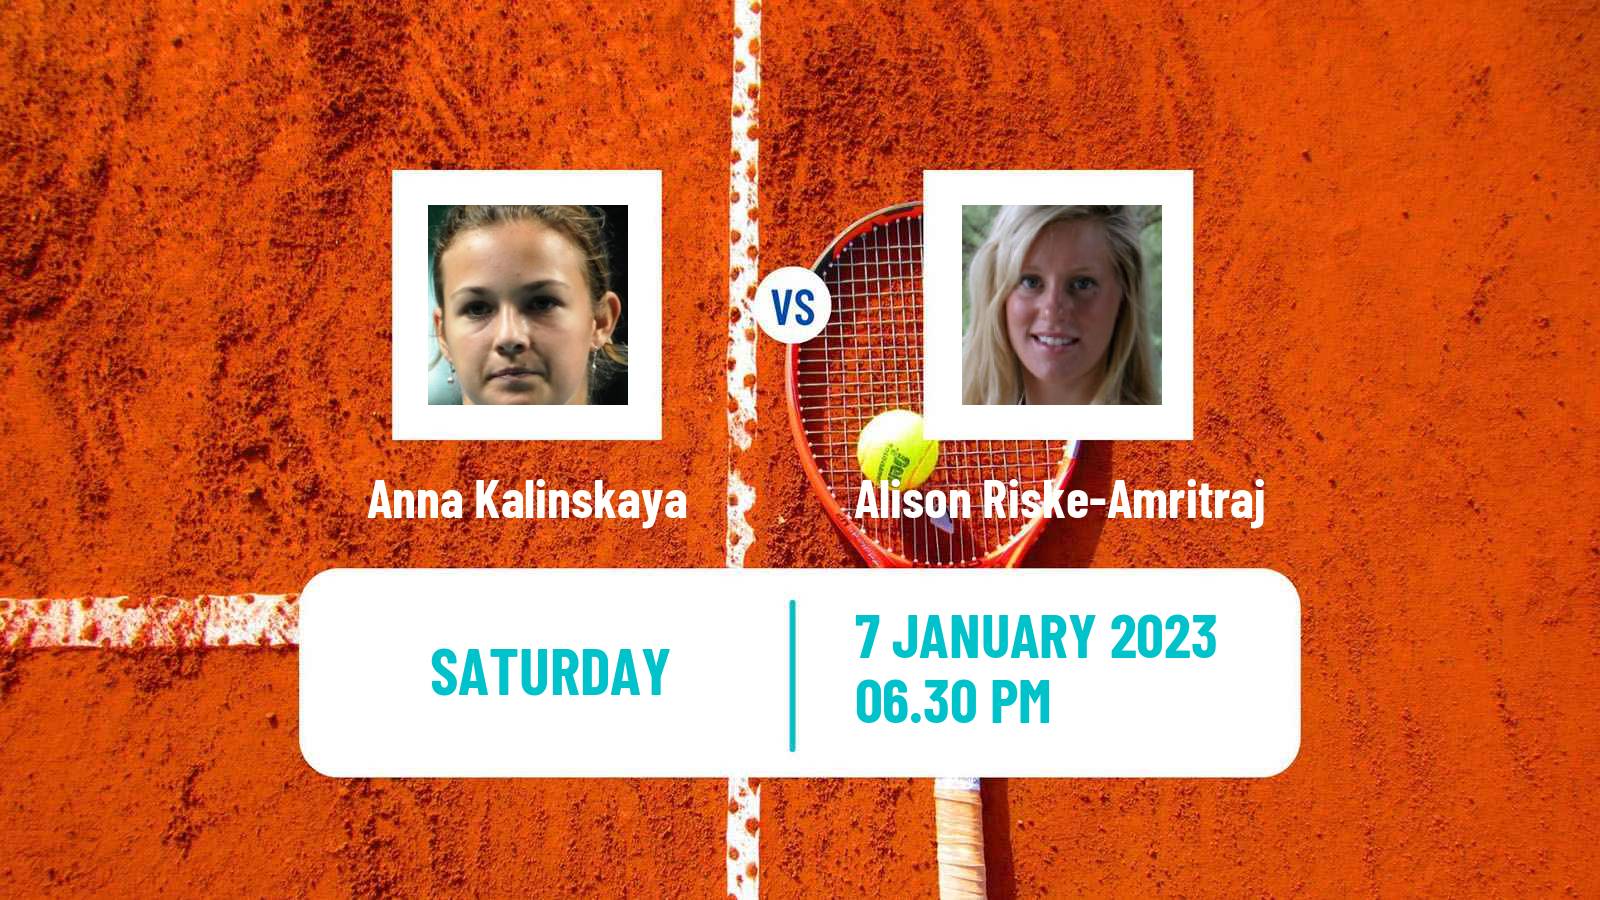 Tennis WTA Adelaide 2 Anna Kalinskaya - Alison Riske-Amritraj